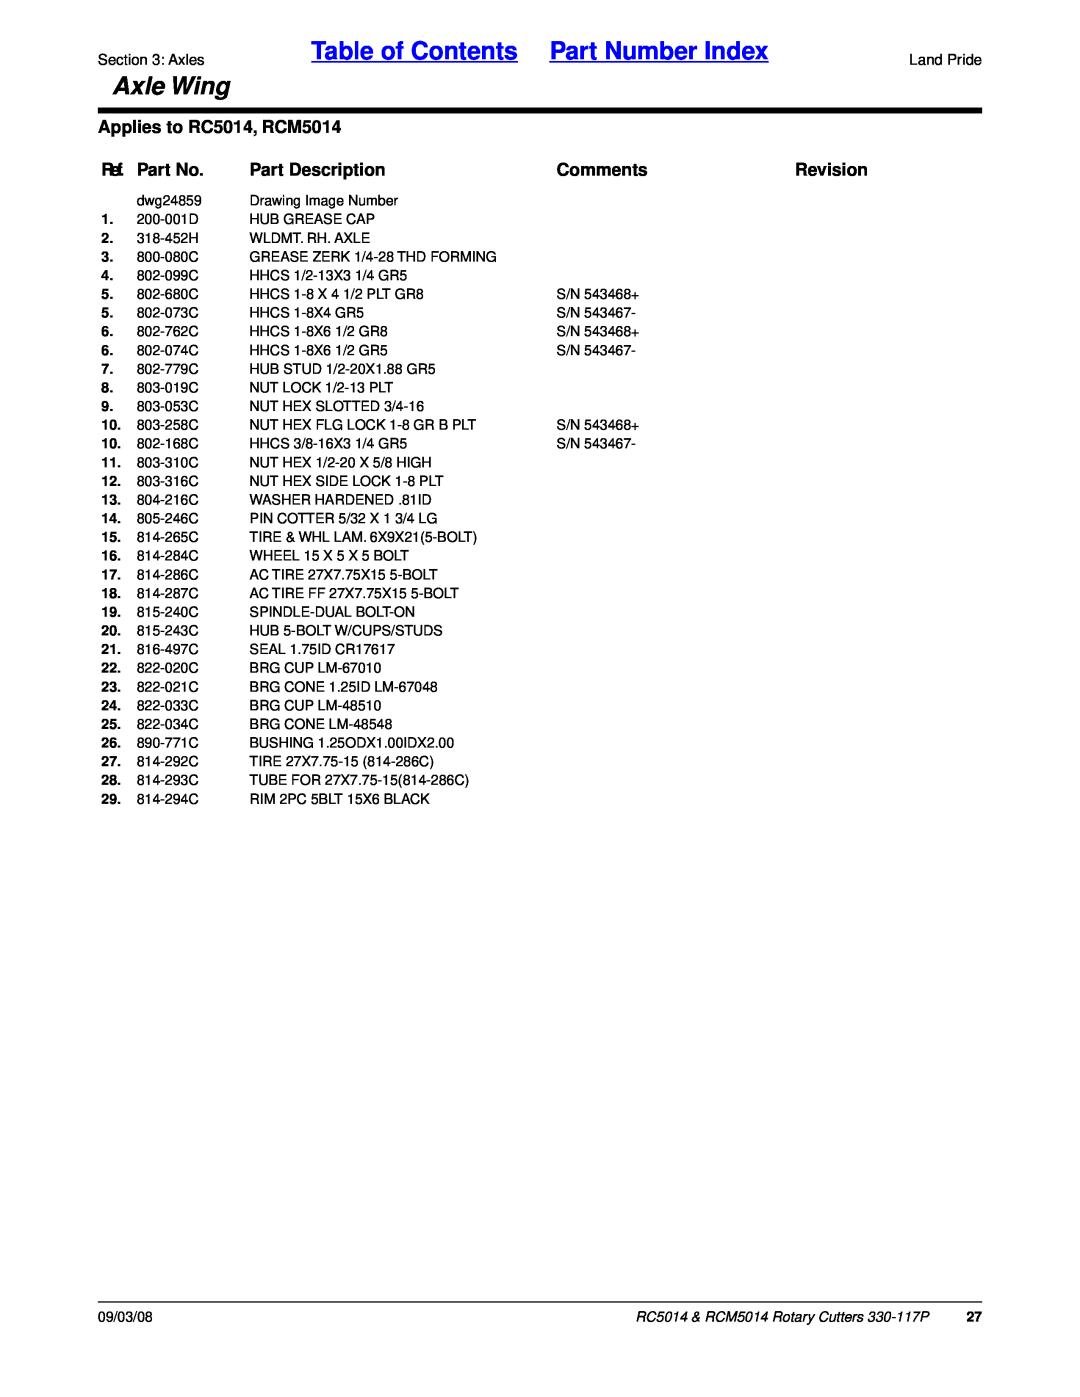 Land Pride Table of Contents Part Number Index, Axle Wing, Applies to RC5014, RCM5014, Ref. Part No, Part Description 